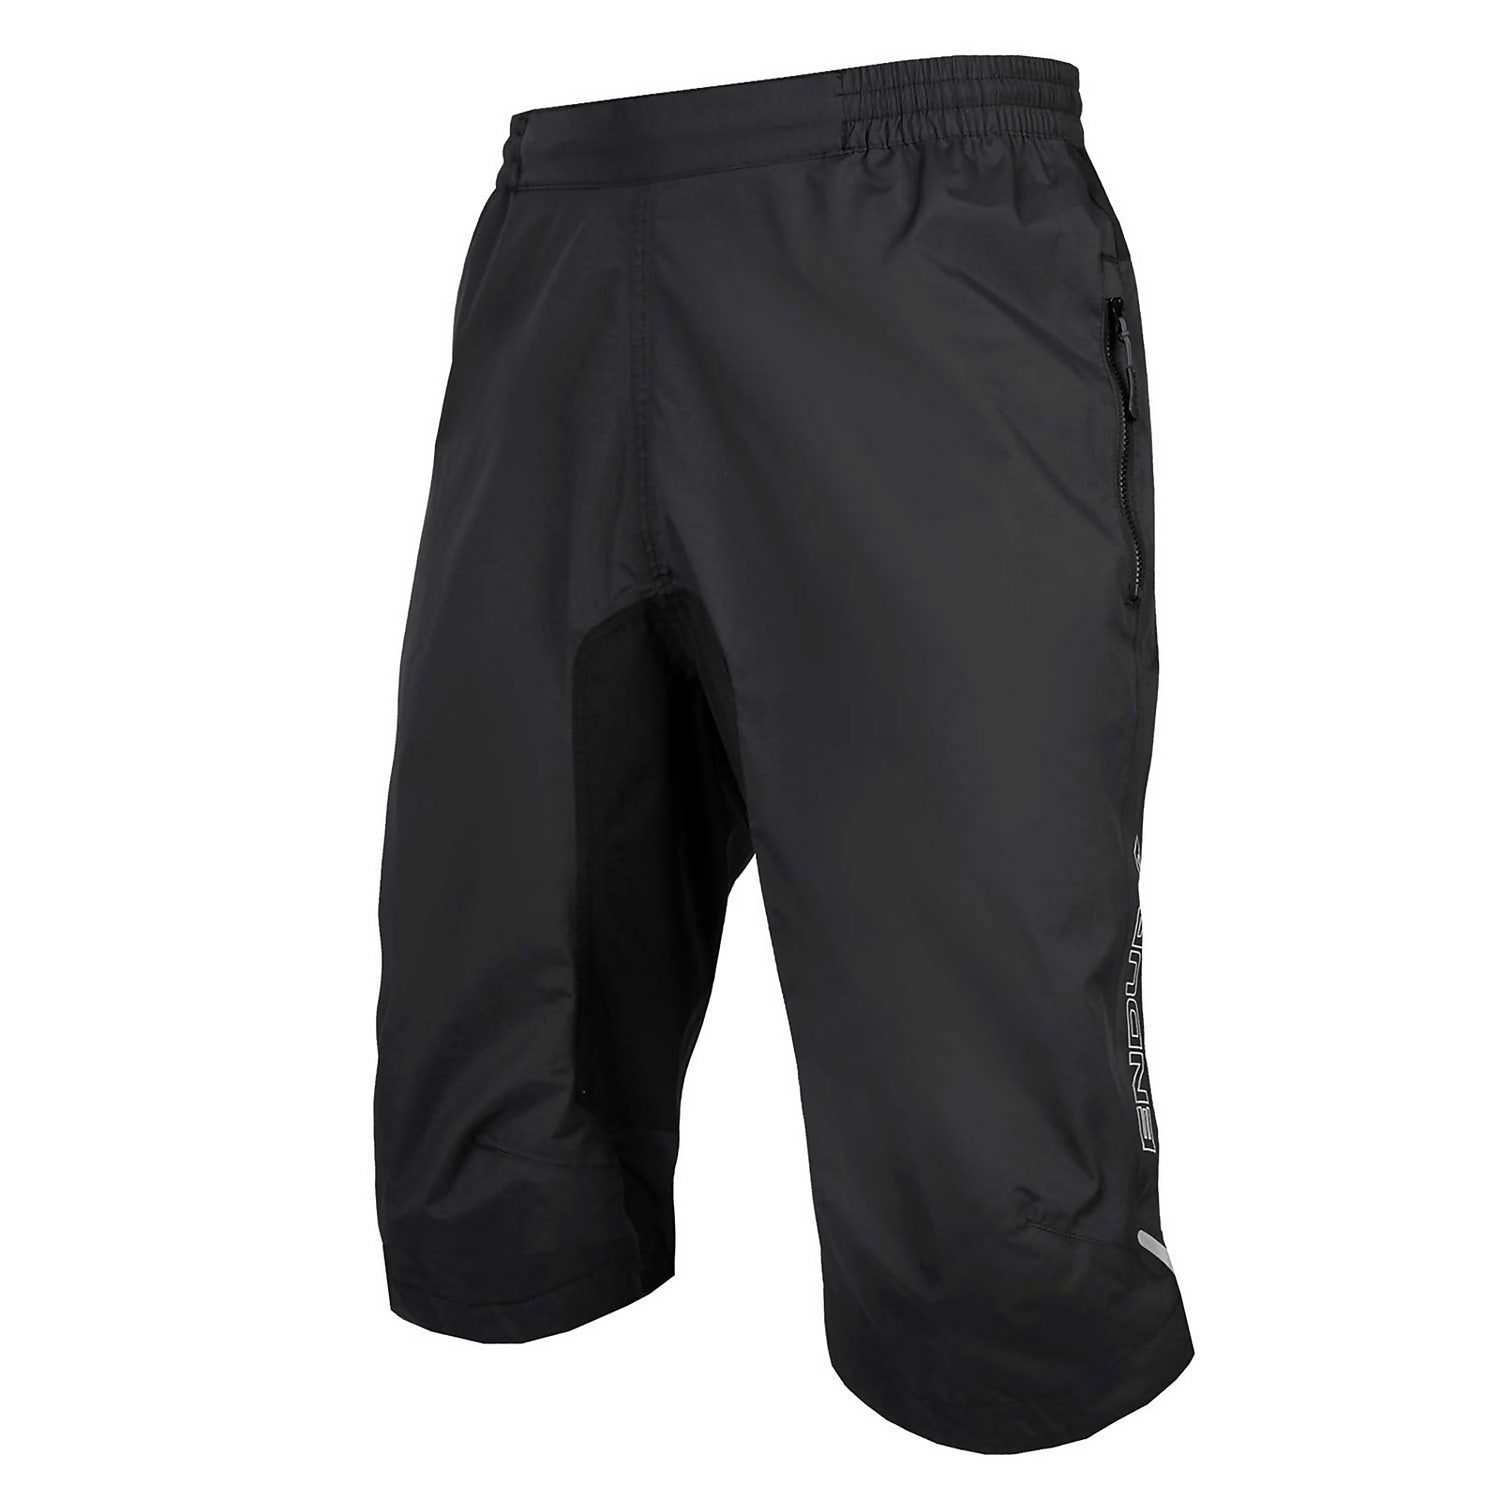 Black mesh waterproof shorts